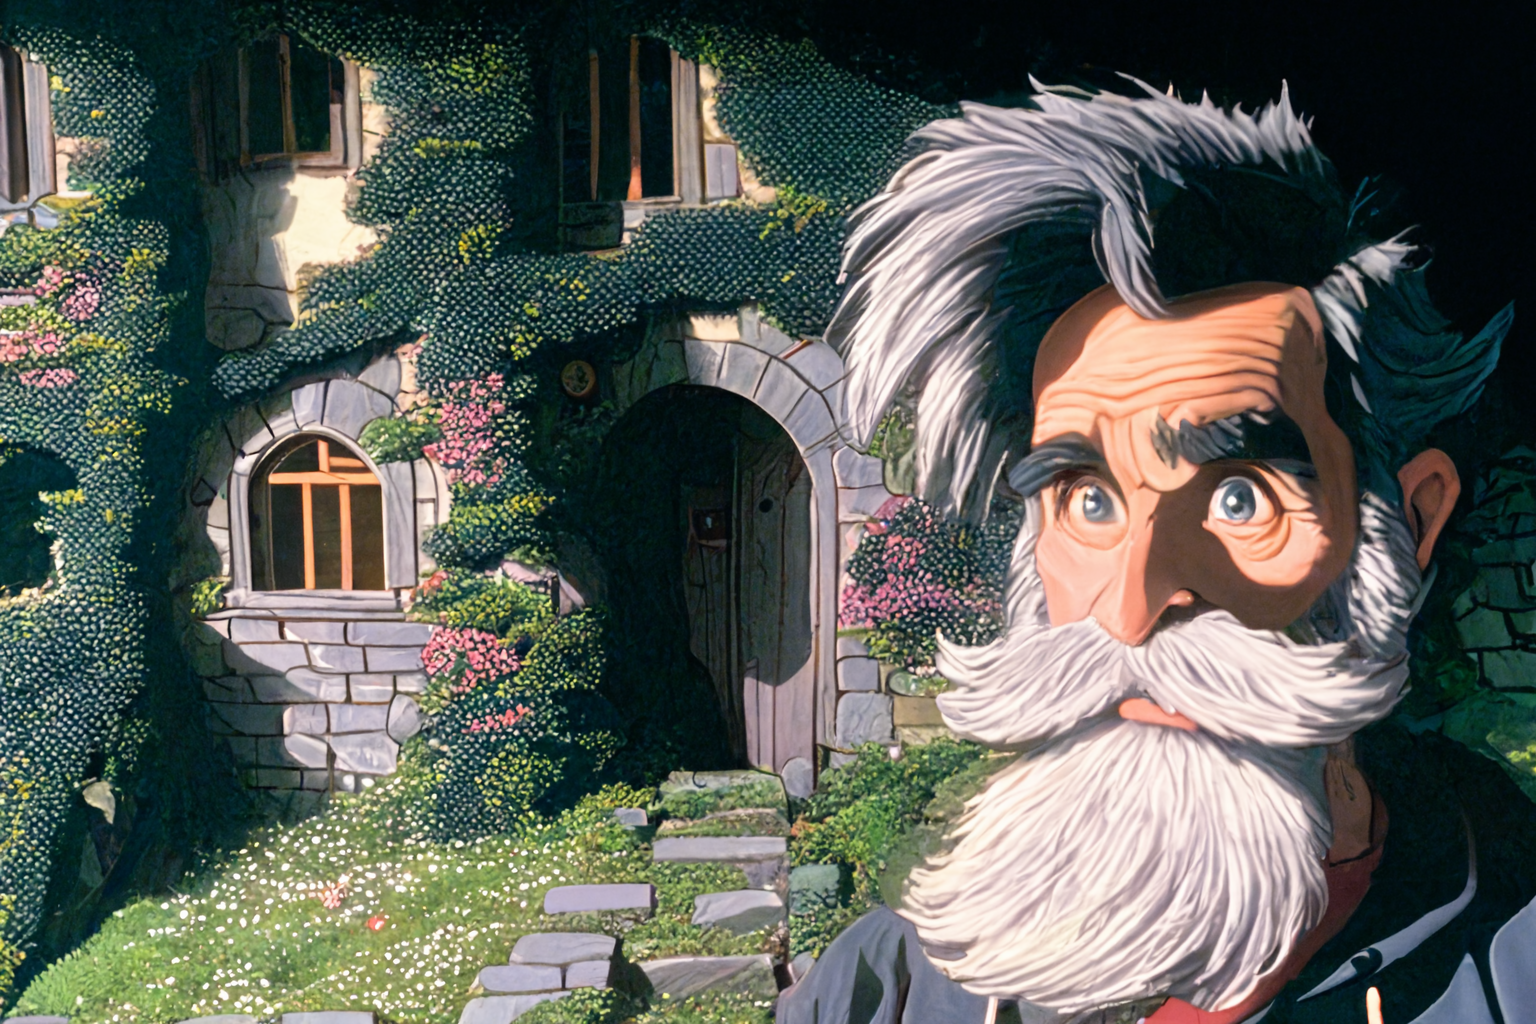 portrait of a bearded man, in Miyazaki style, made by Midjourney